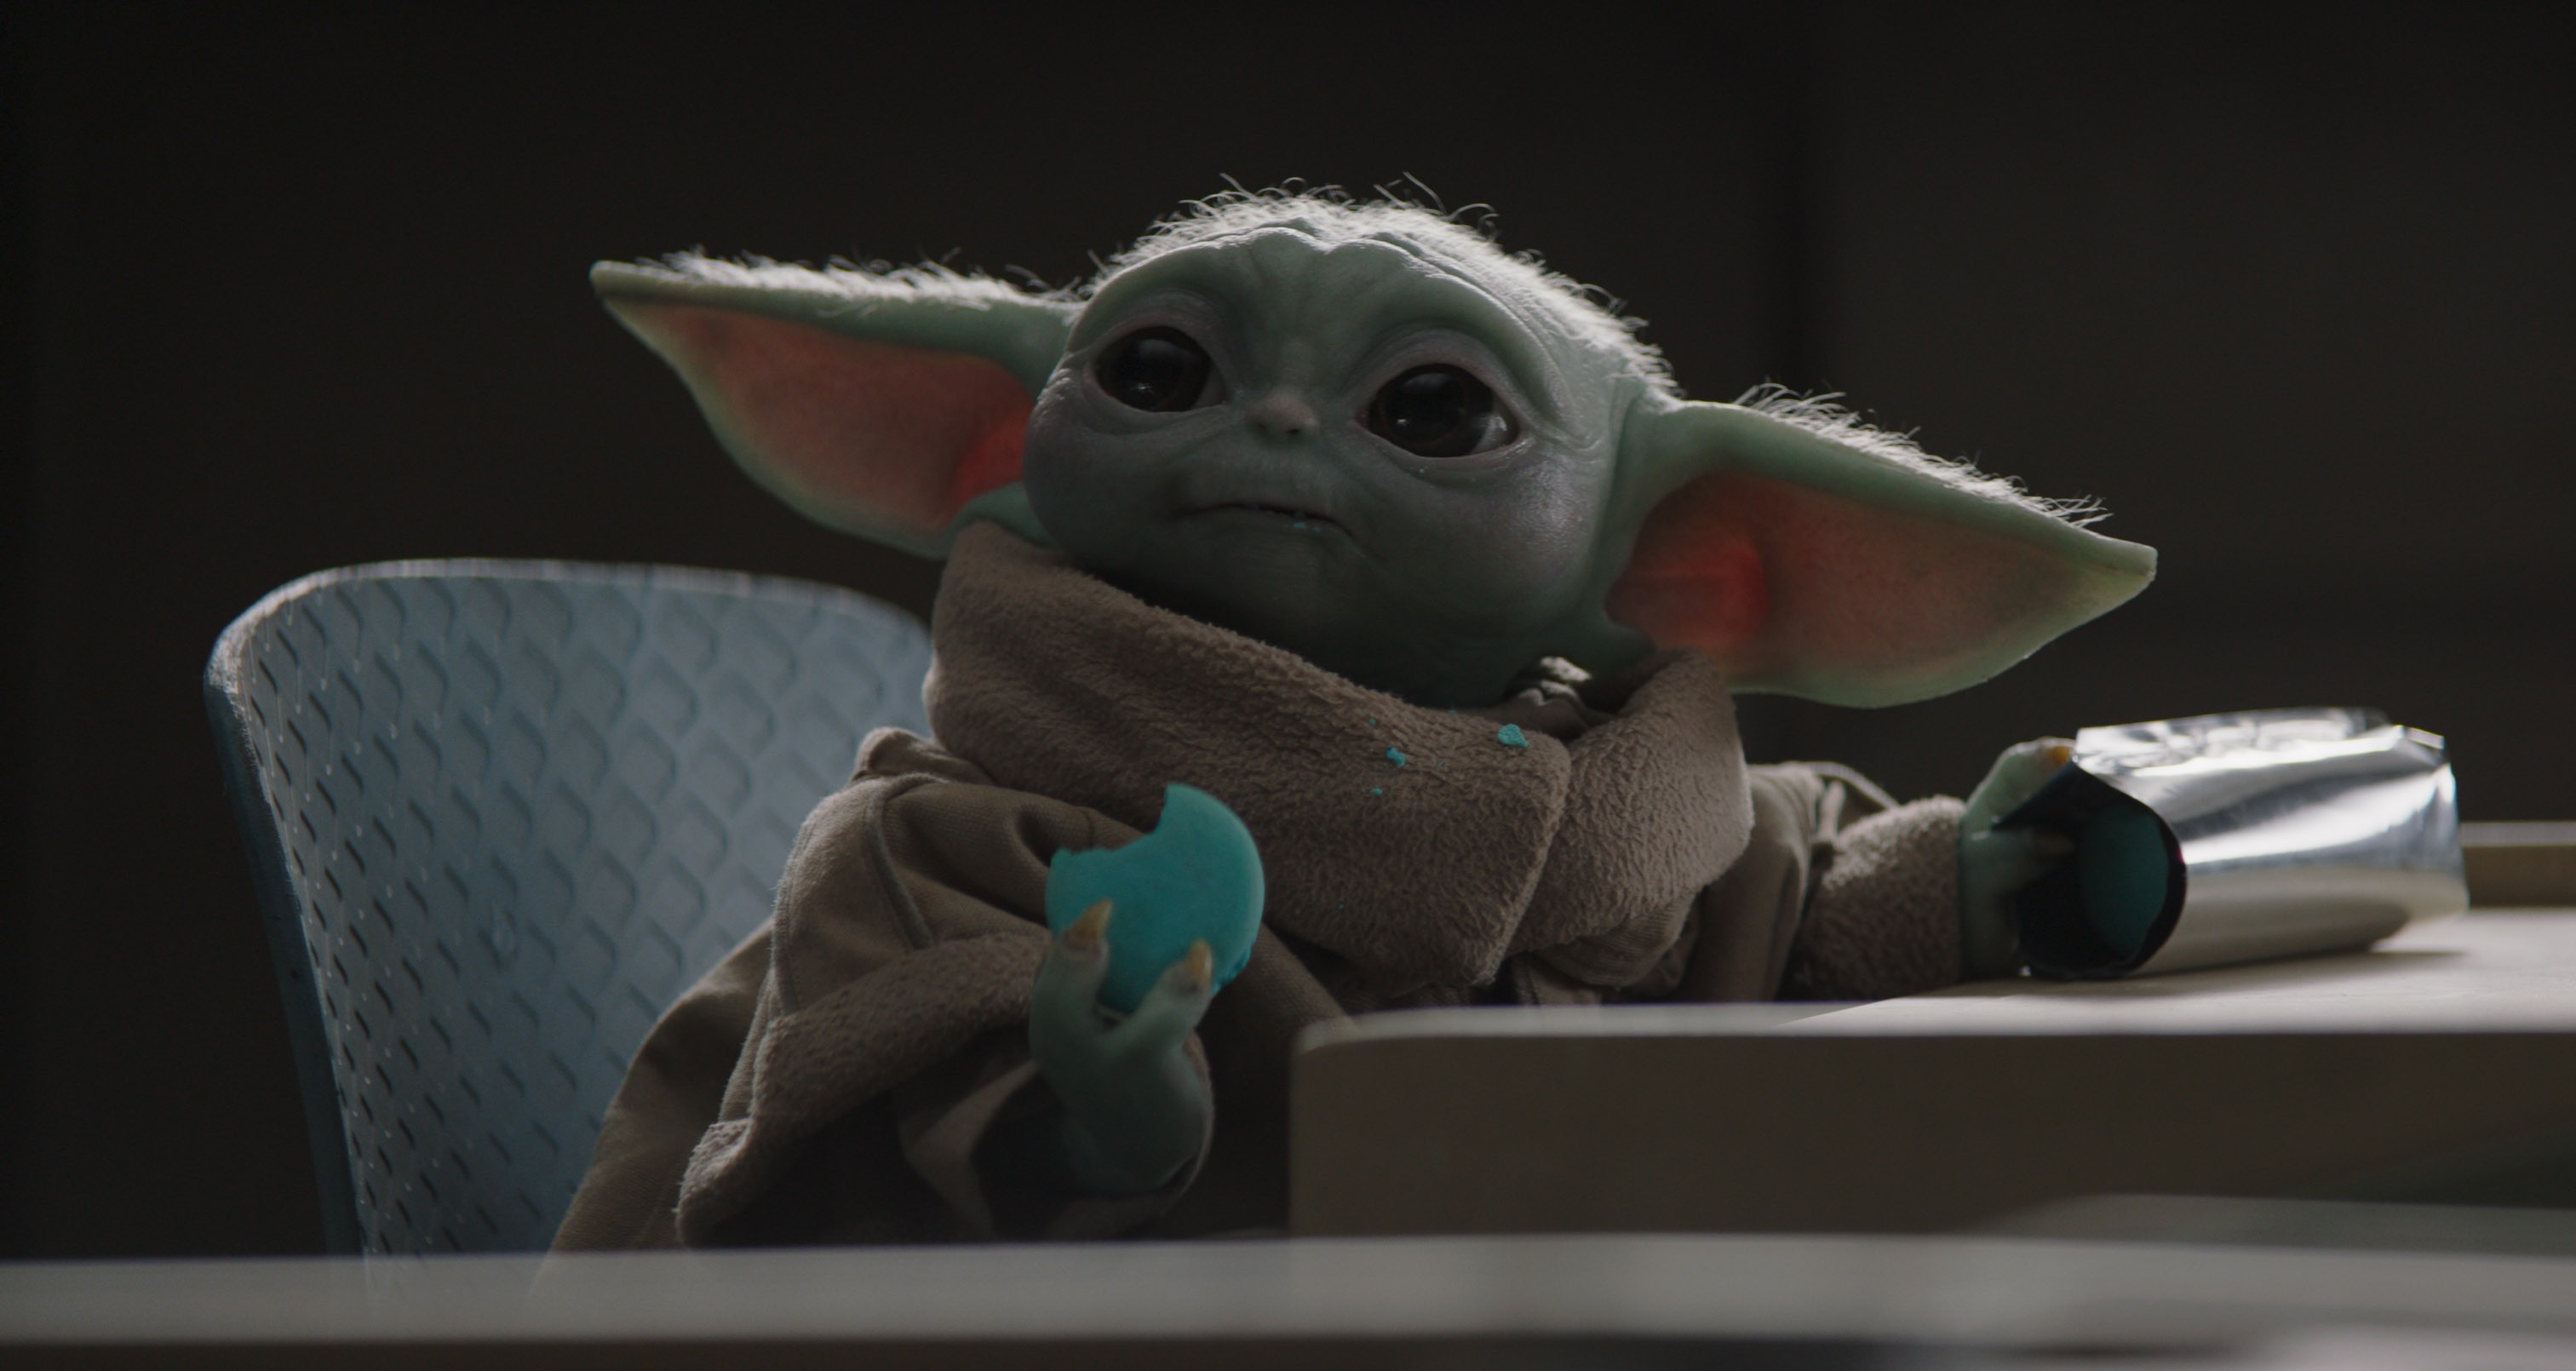 Baby Yoda is Grogu  The Mandalorian's Child has real name